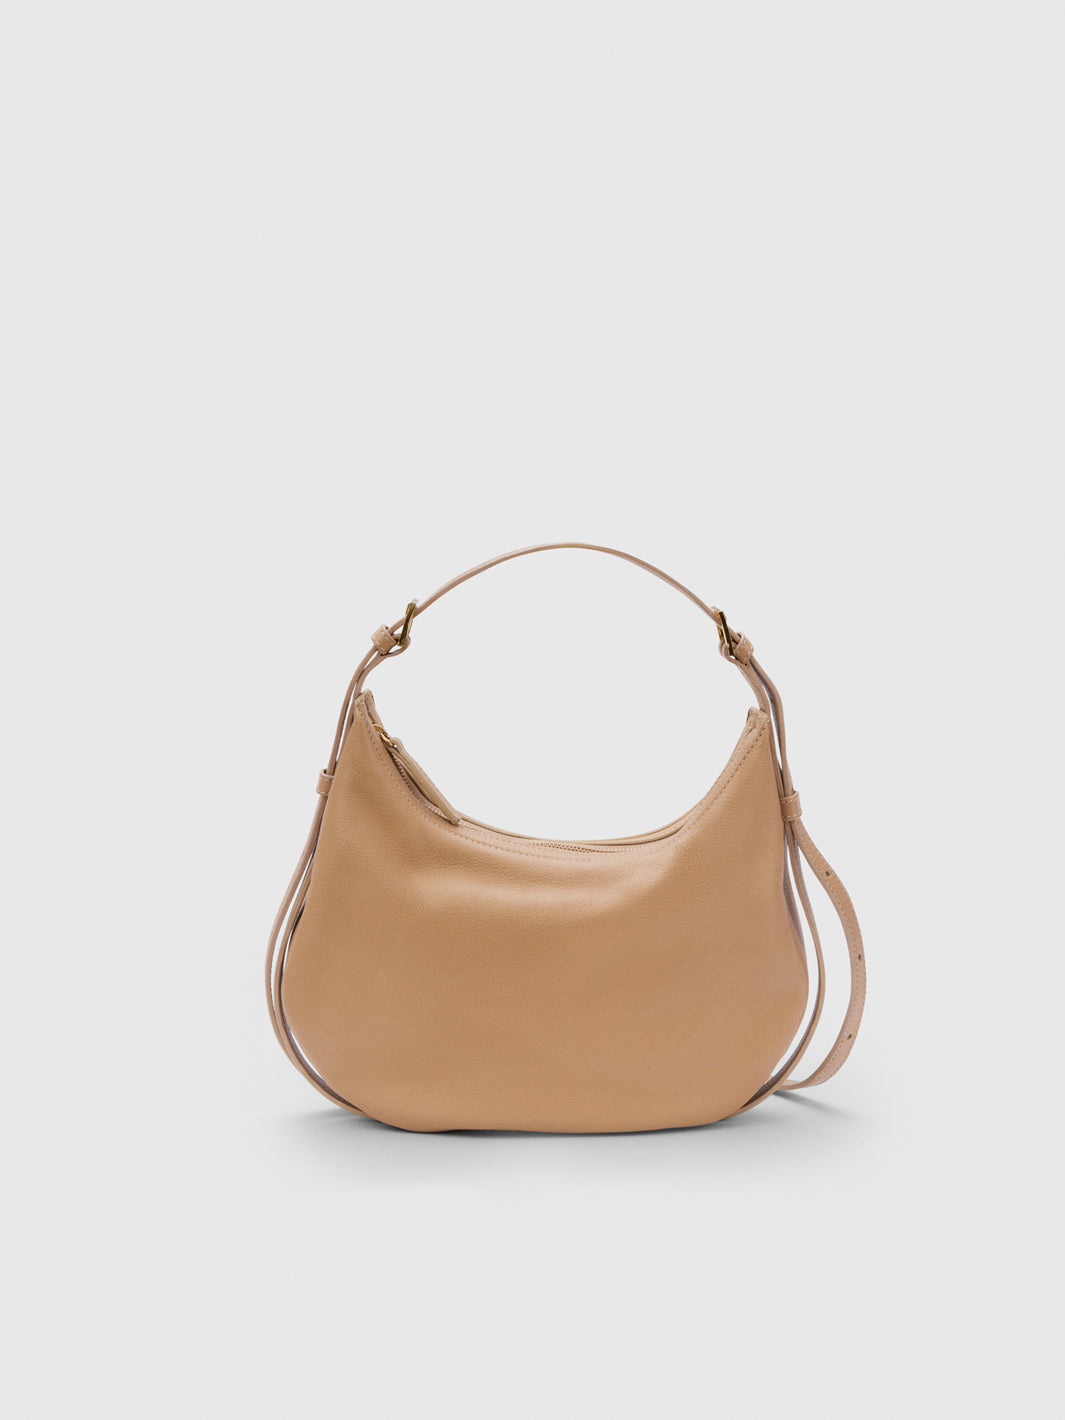 Liveri Nocciola/Contrast Stitch Grained Leather Small hobo bag